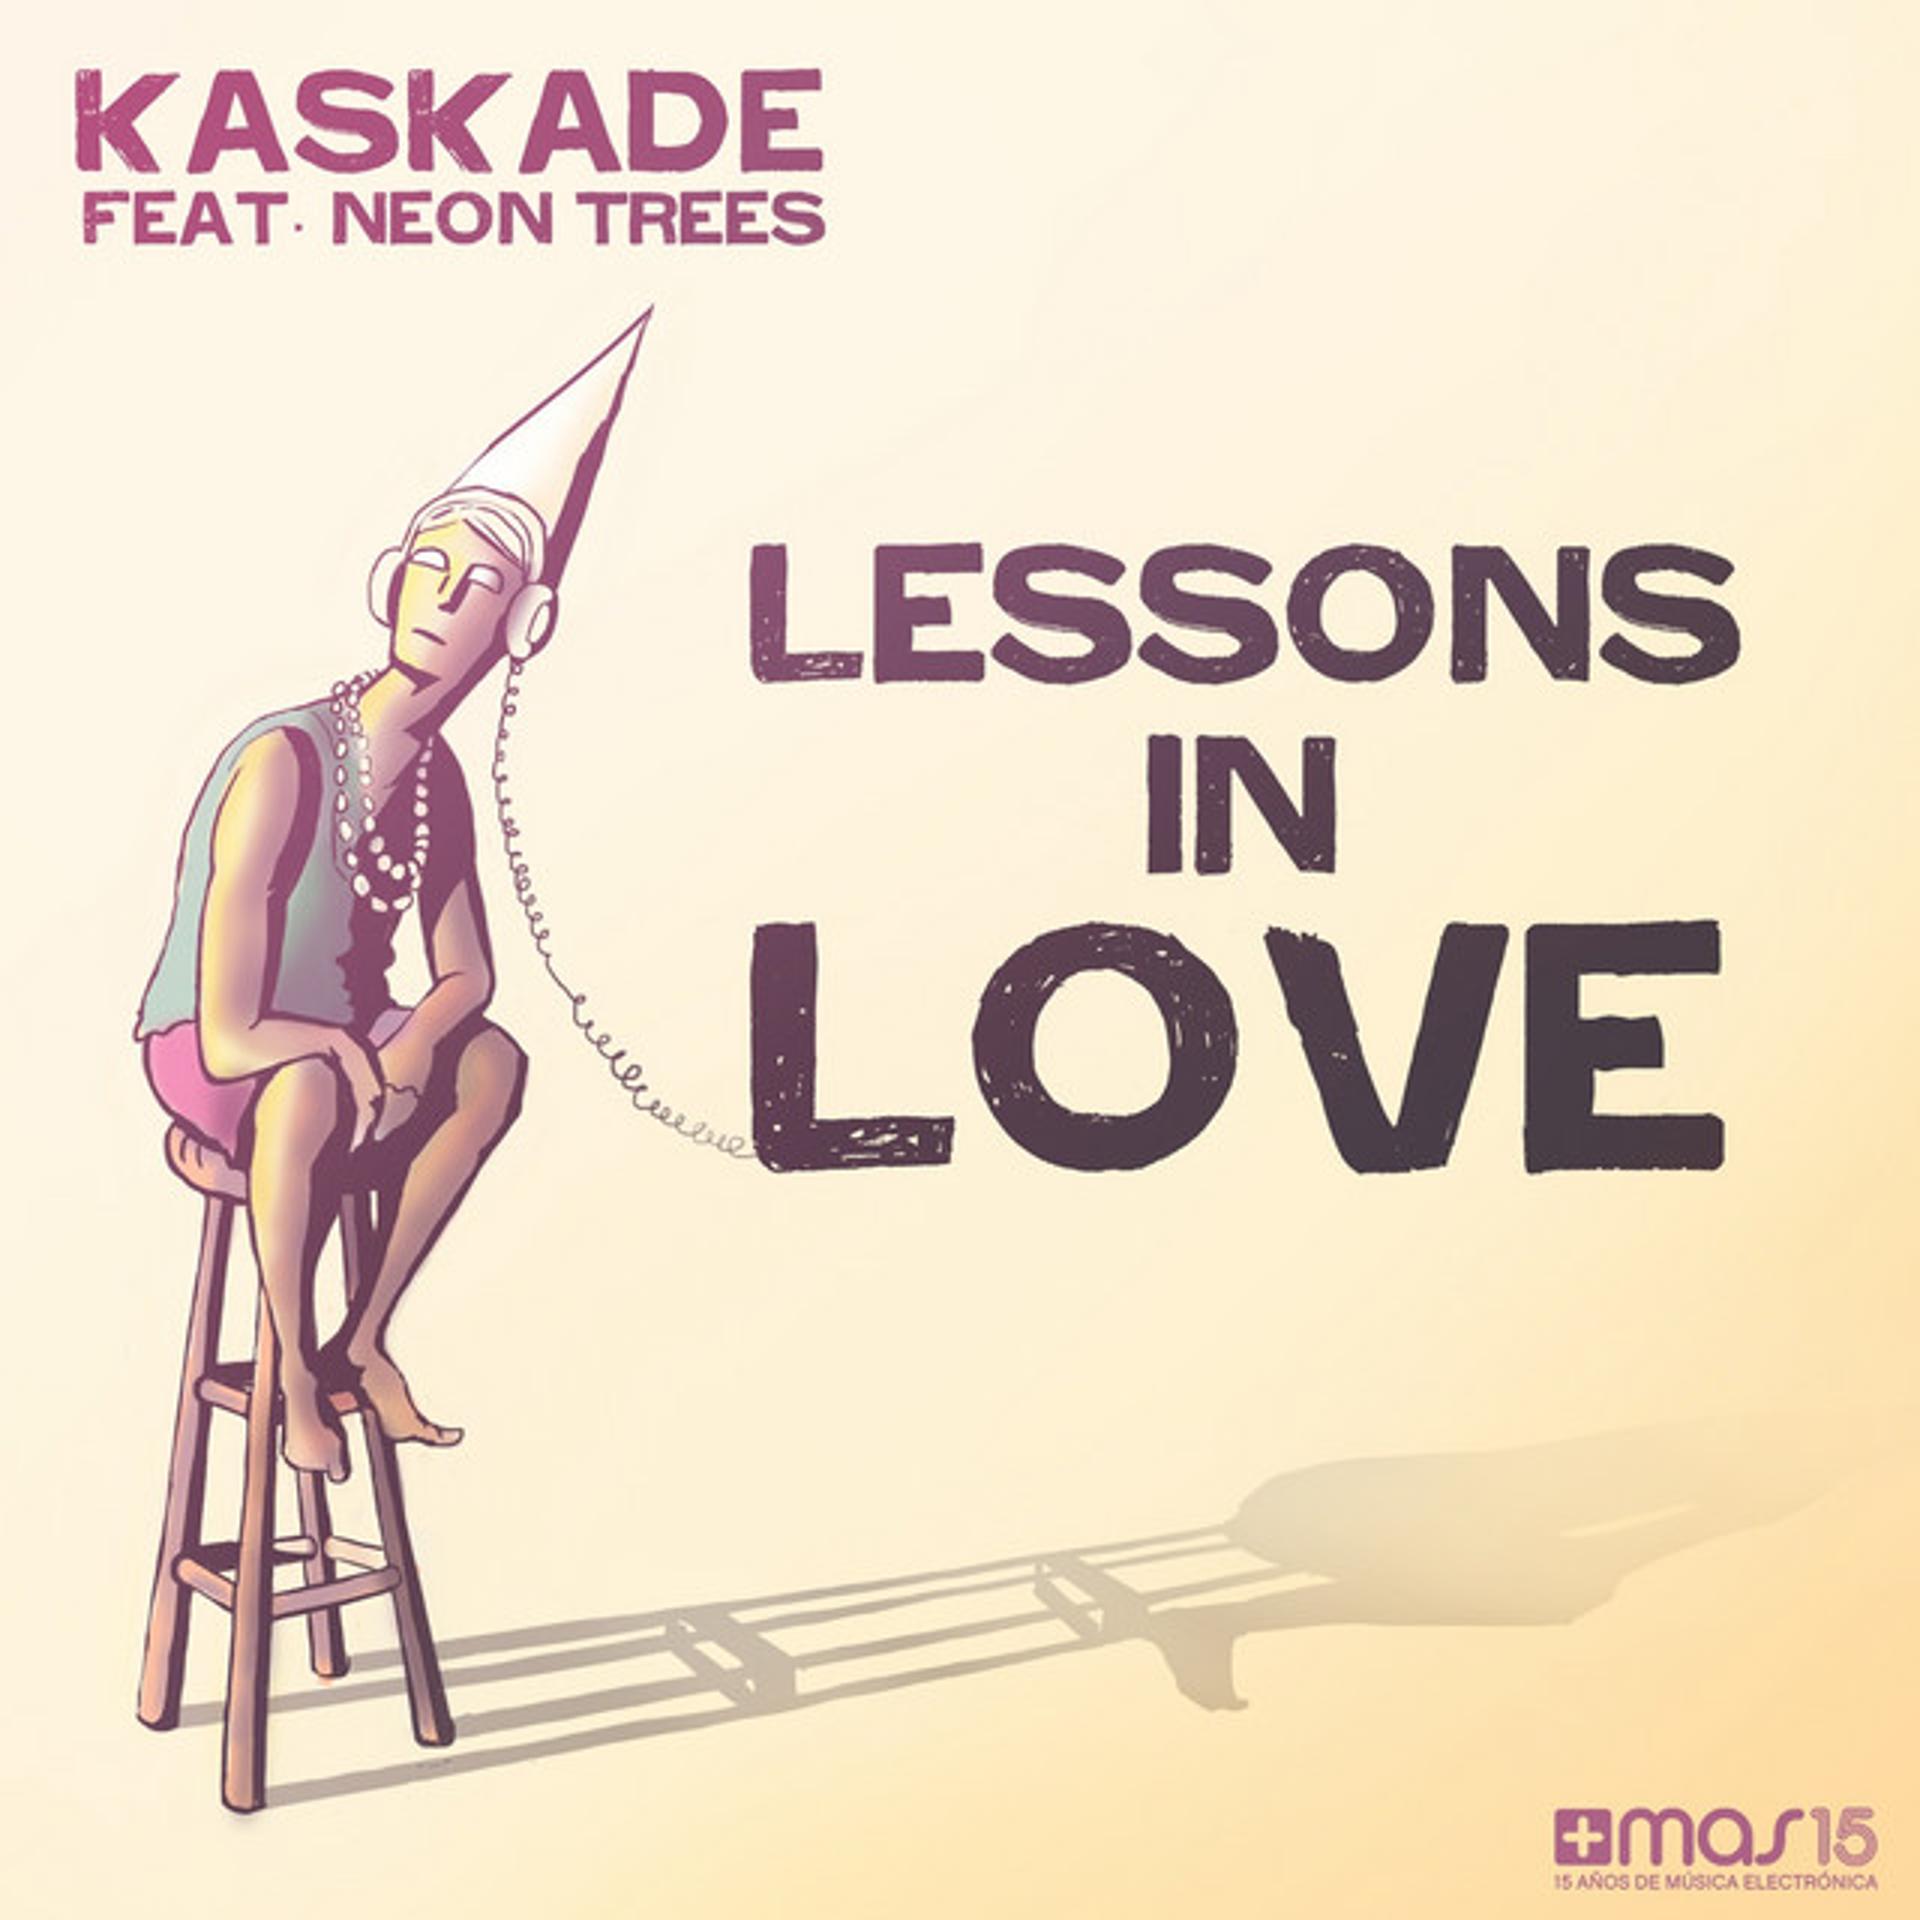 Featuring love. Лов Лессон. Lessons in Love. Lessons is Love. Lessons in Love game.